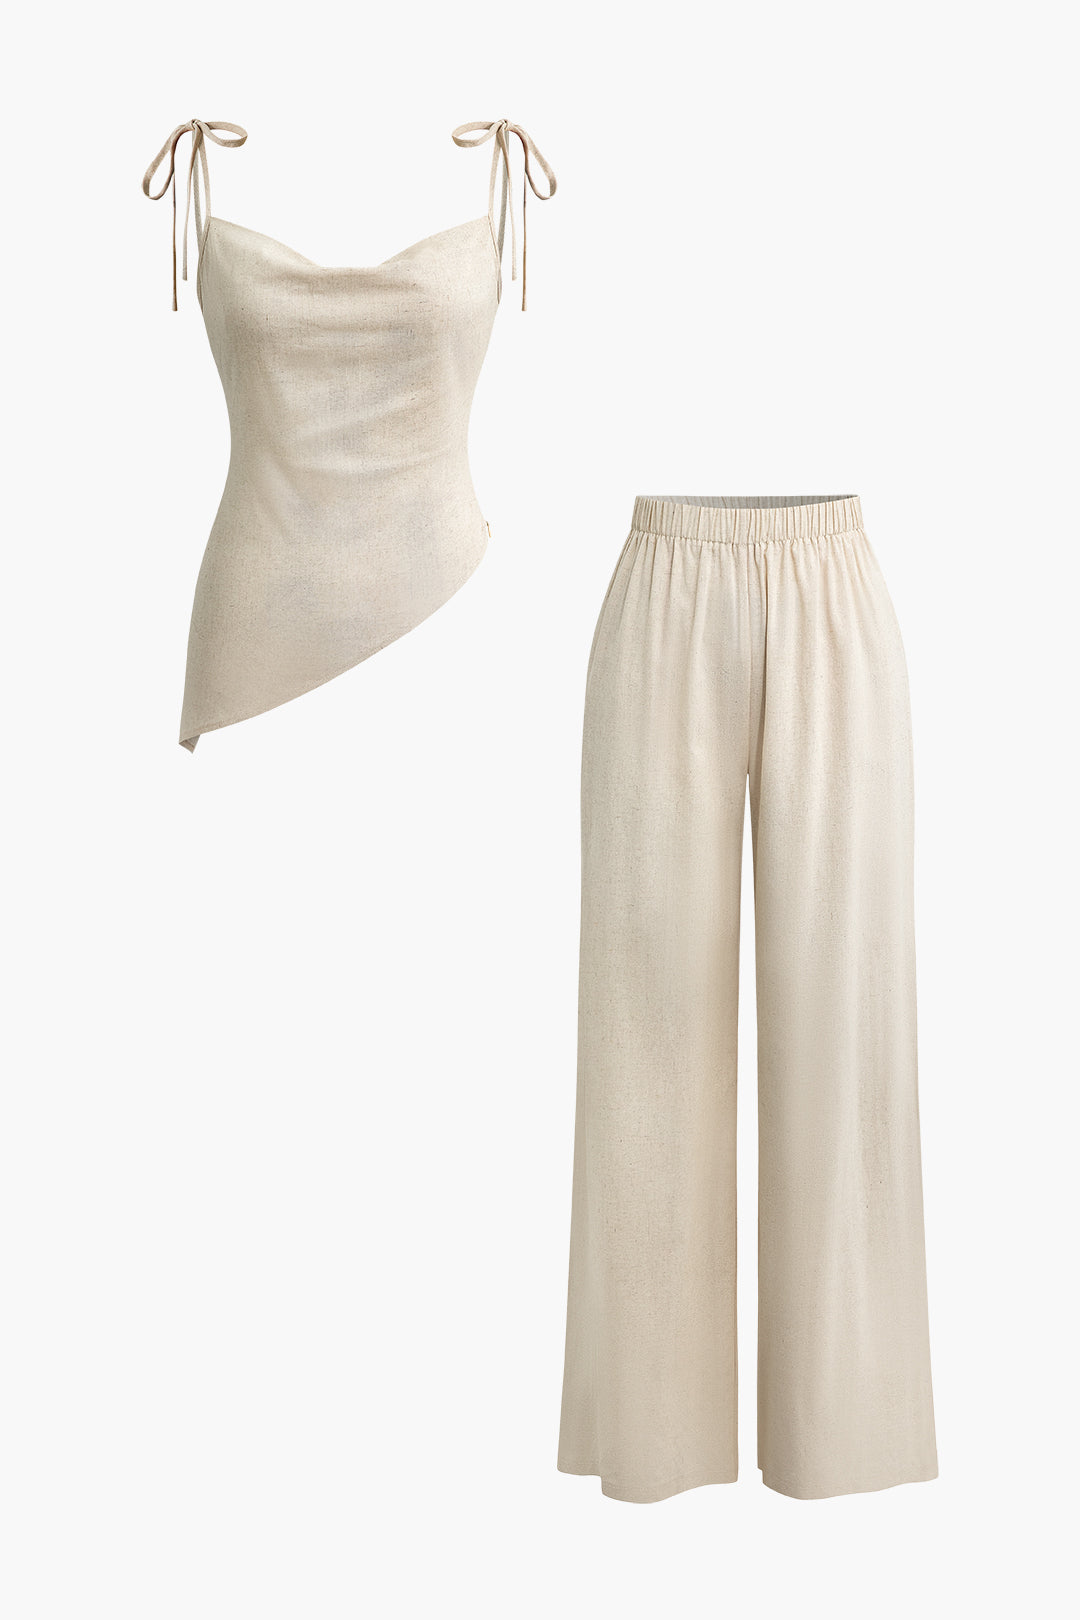 Linen Asymmetric Tie Strap Cowl Neck Cami Top And Pants Set